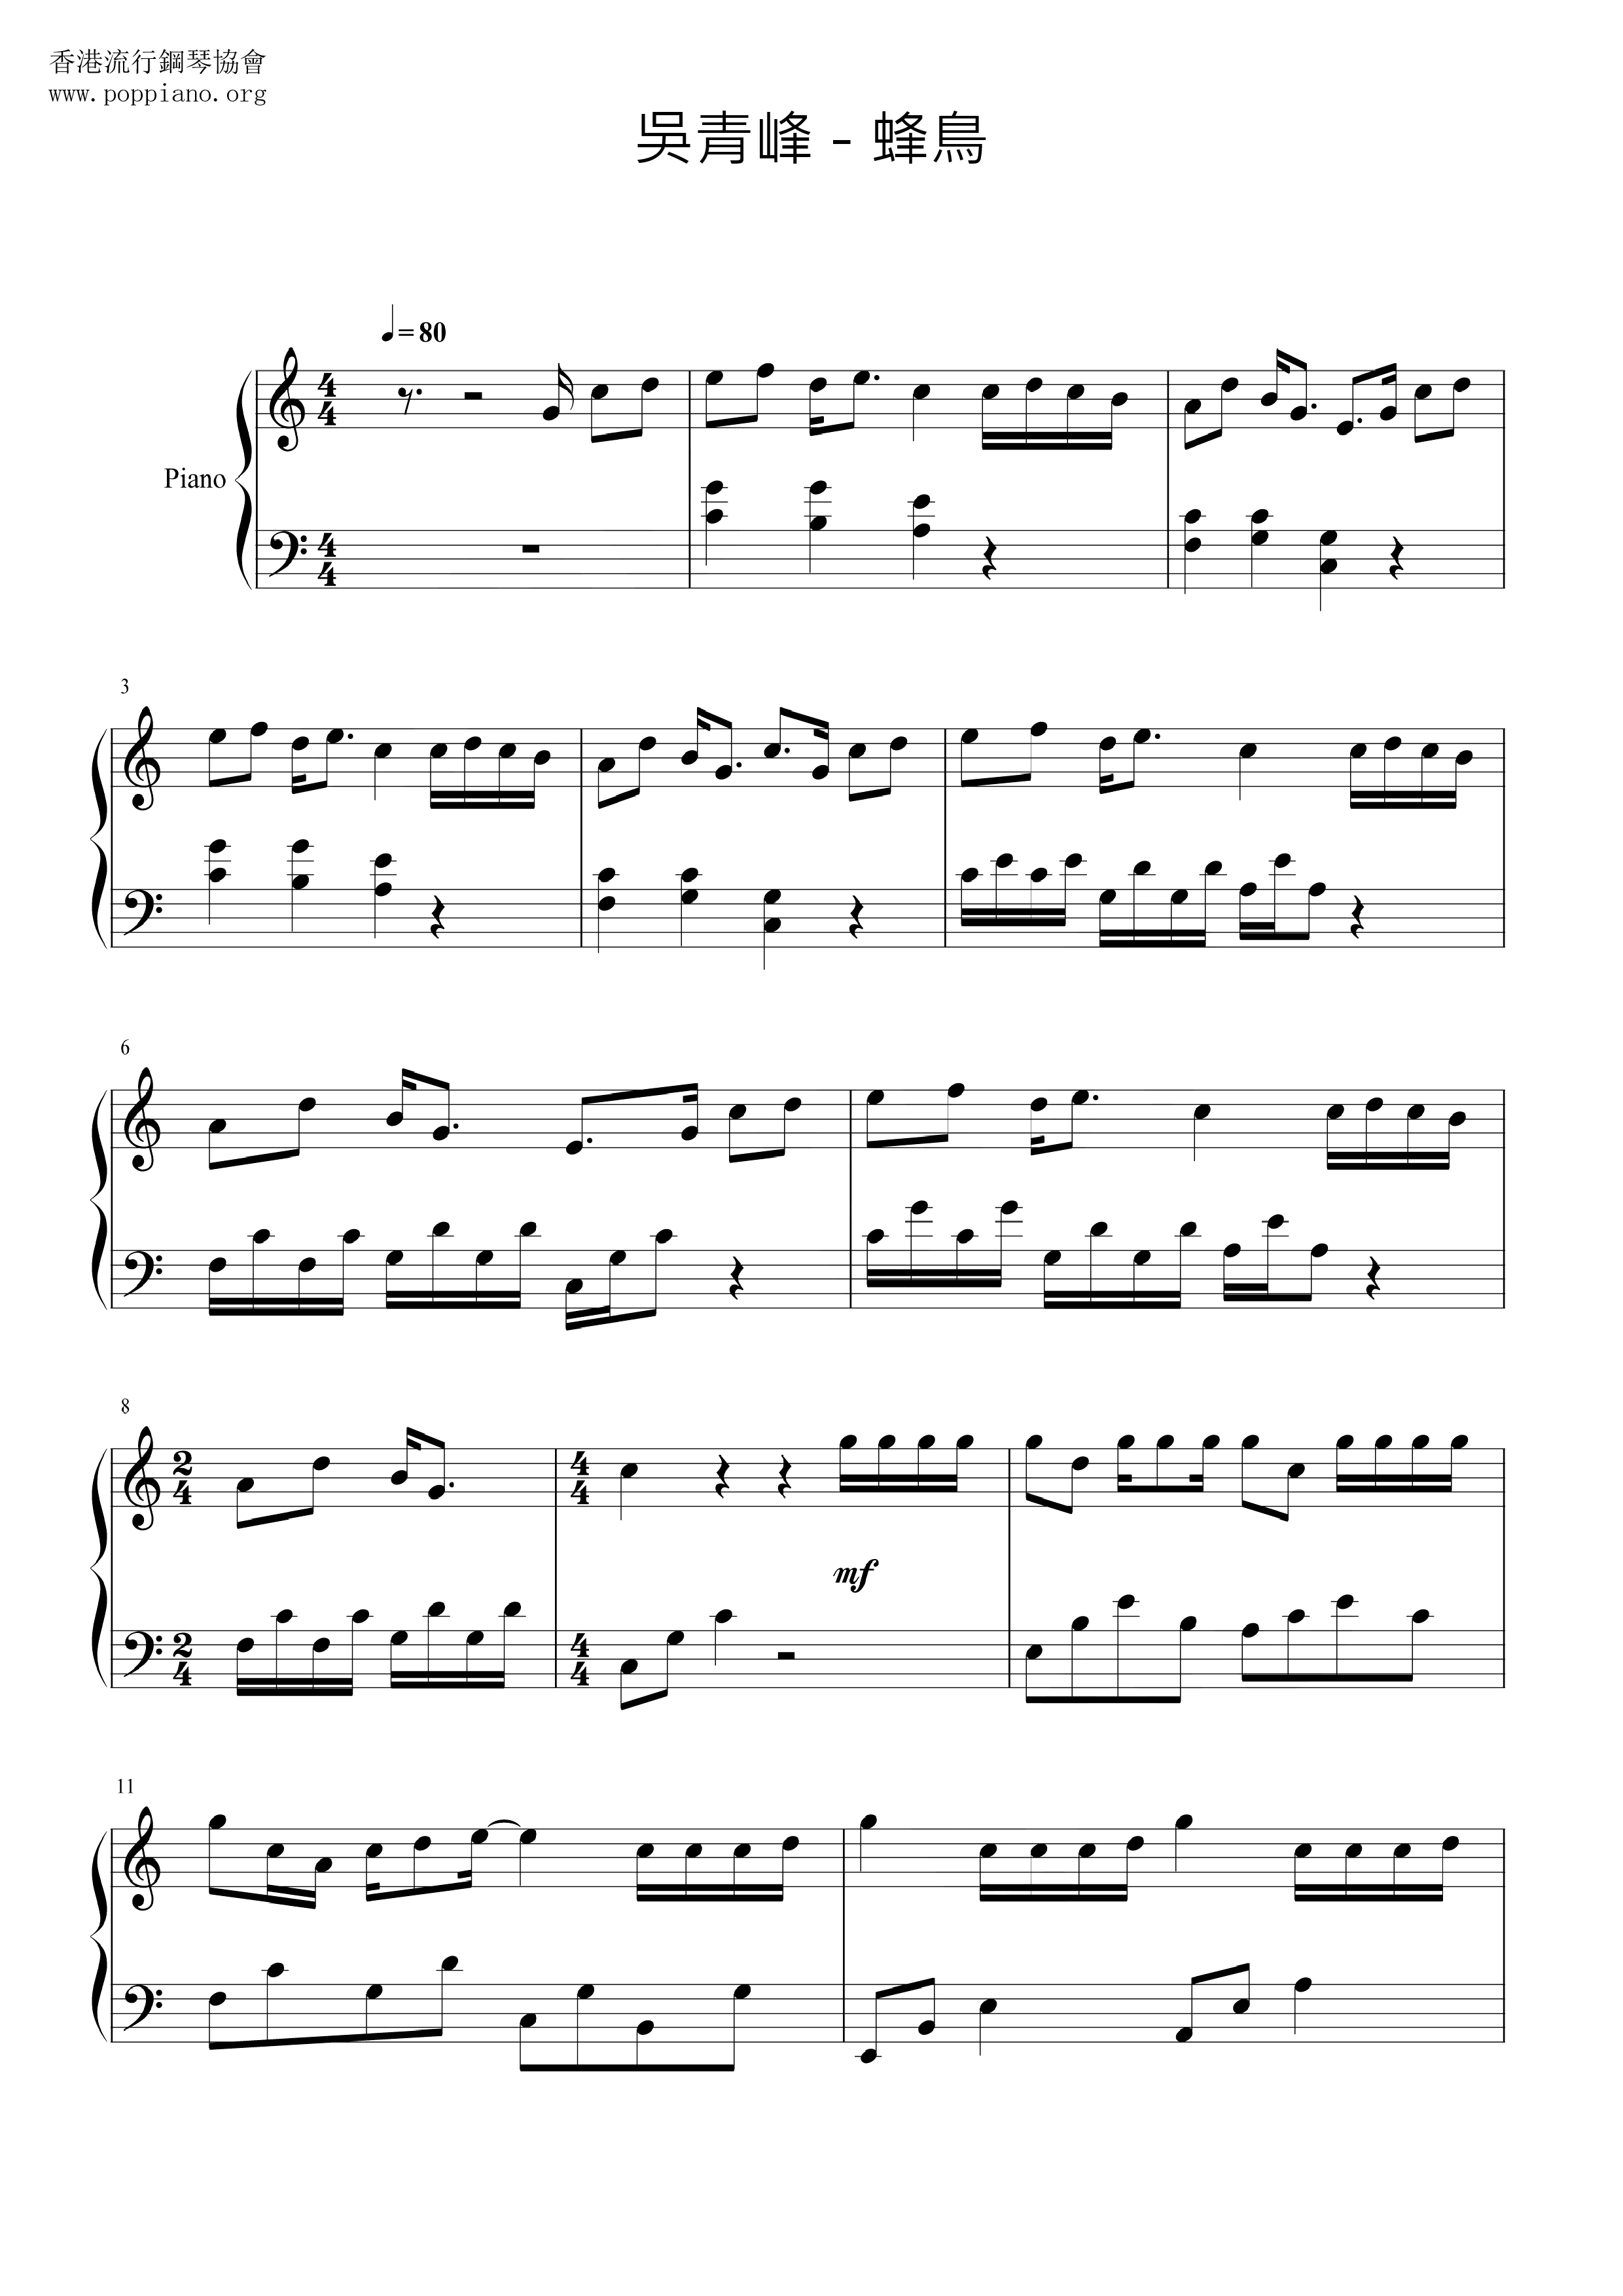 Hummingbird Score